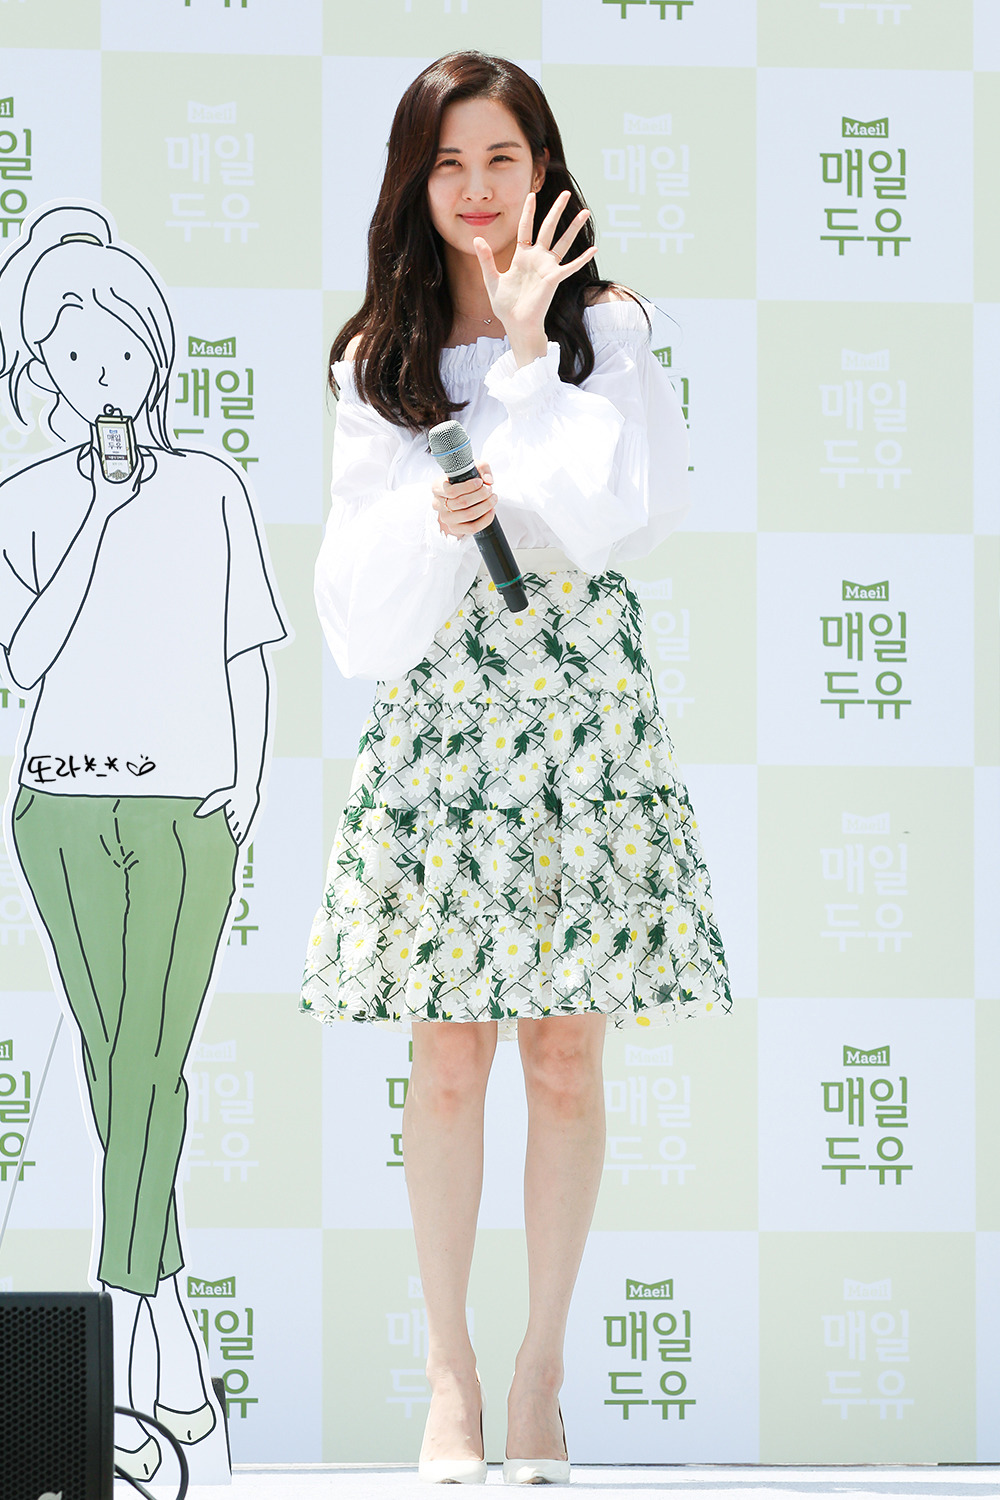  [PIC][03-06-2017]SeoHyun tham dự sự kiện “City Forestival - Maeil Duyou 'Confidence Diary'” vào chiều nay - Page 2 213411345933BBF0338CC5